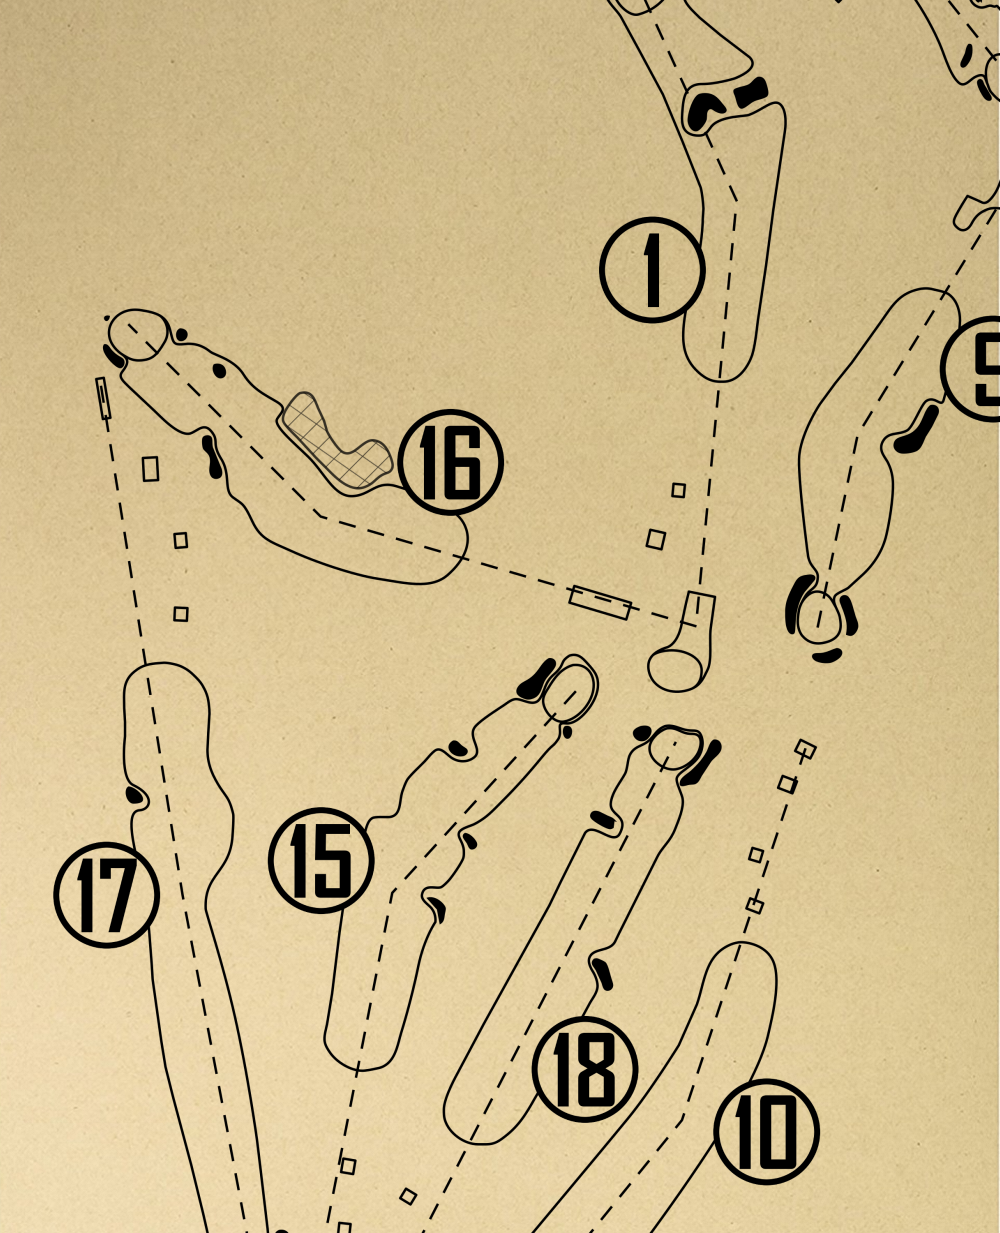 Sankaty Head Golf Club Outline (Print)